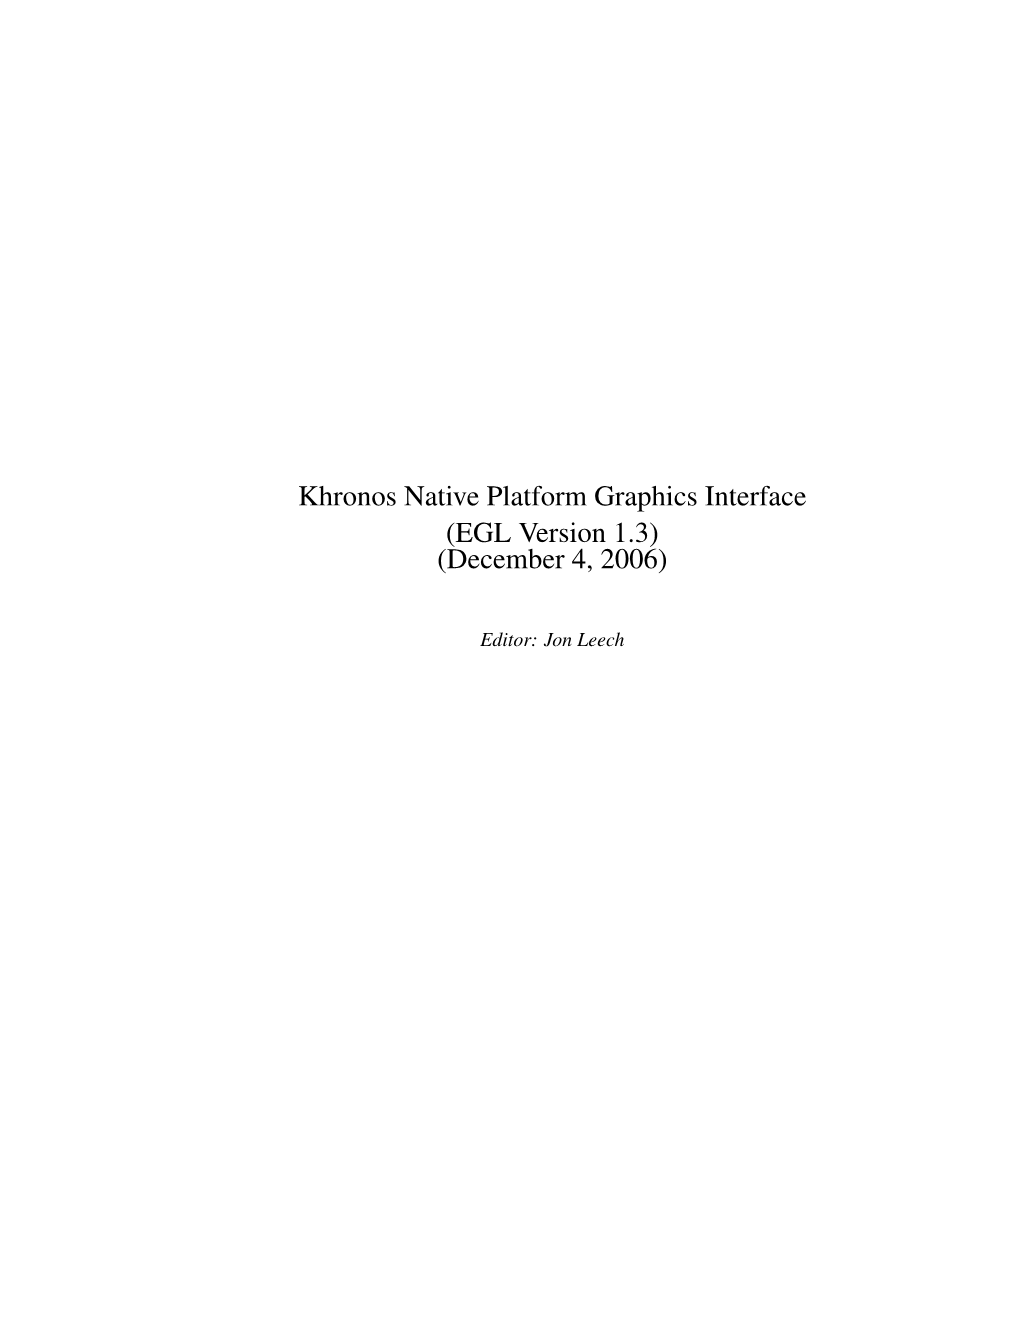 Khronos Native Platform Graphics Interface (EGL Version 1.3) (December 4, 2006)